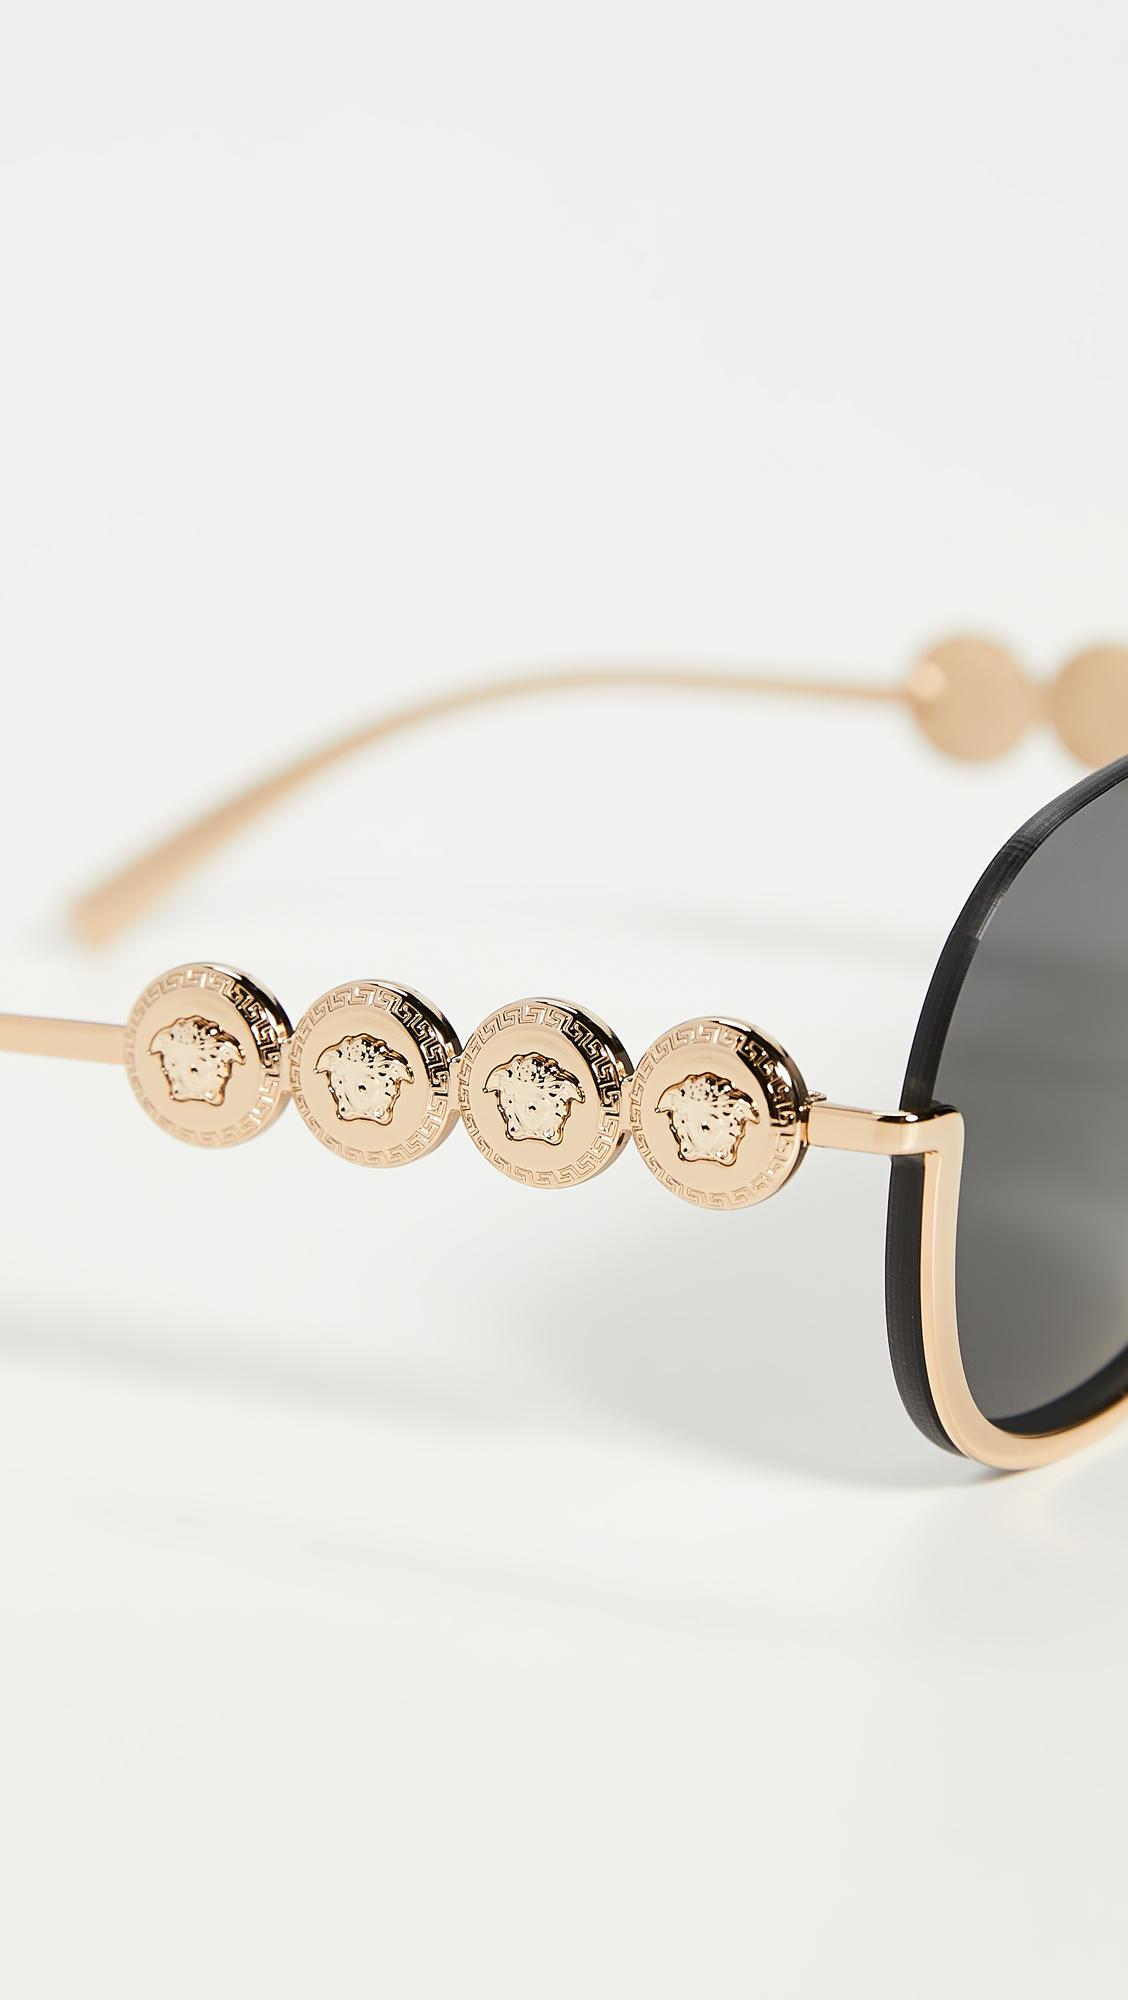 Versace 0ve2215 Sunglasses in Gold/Grey (Gray) for Men - Lyst